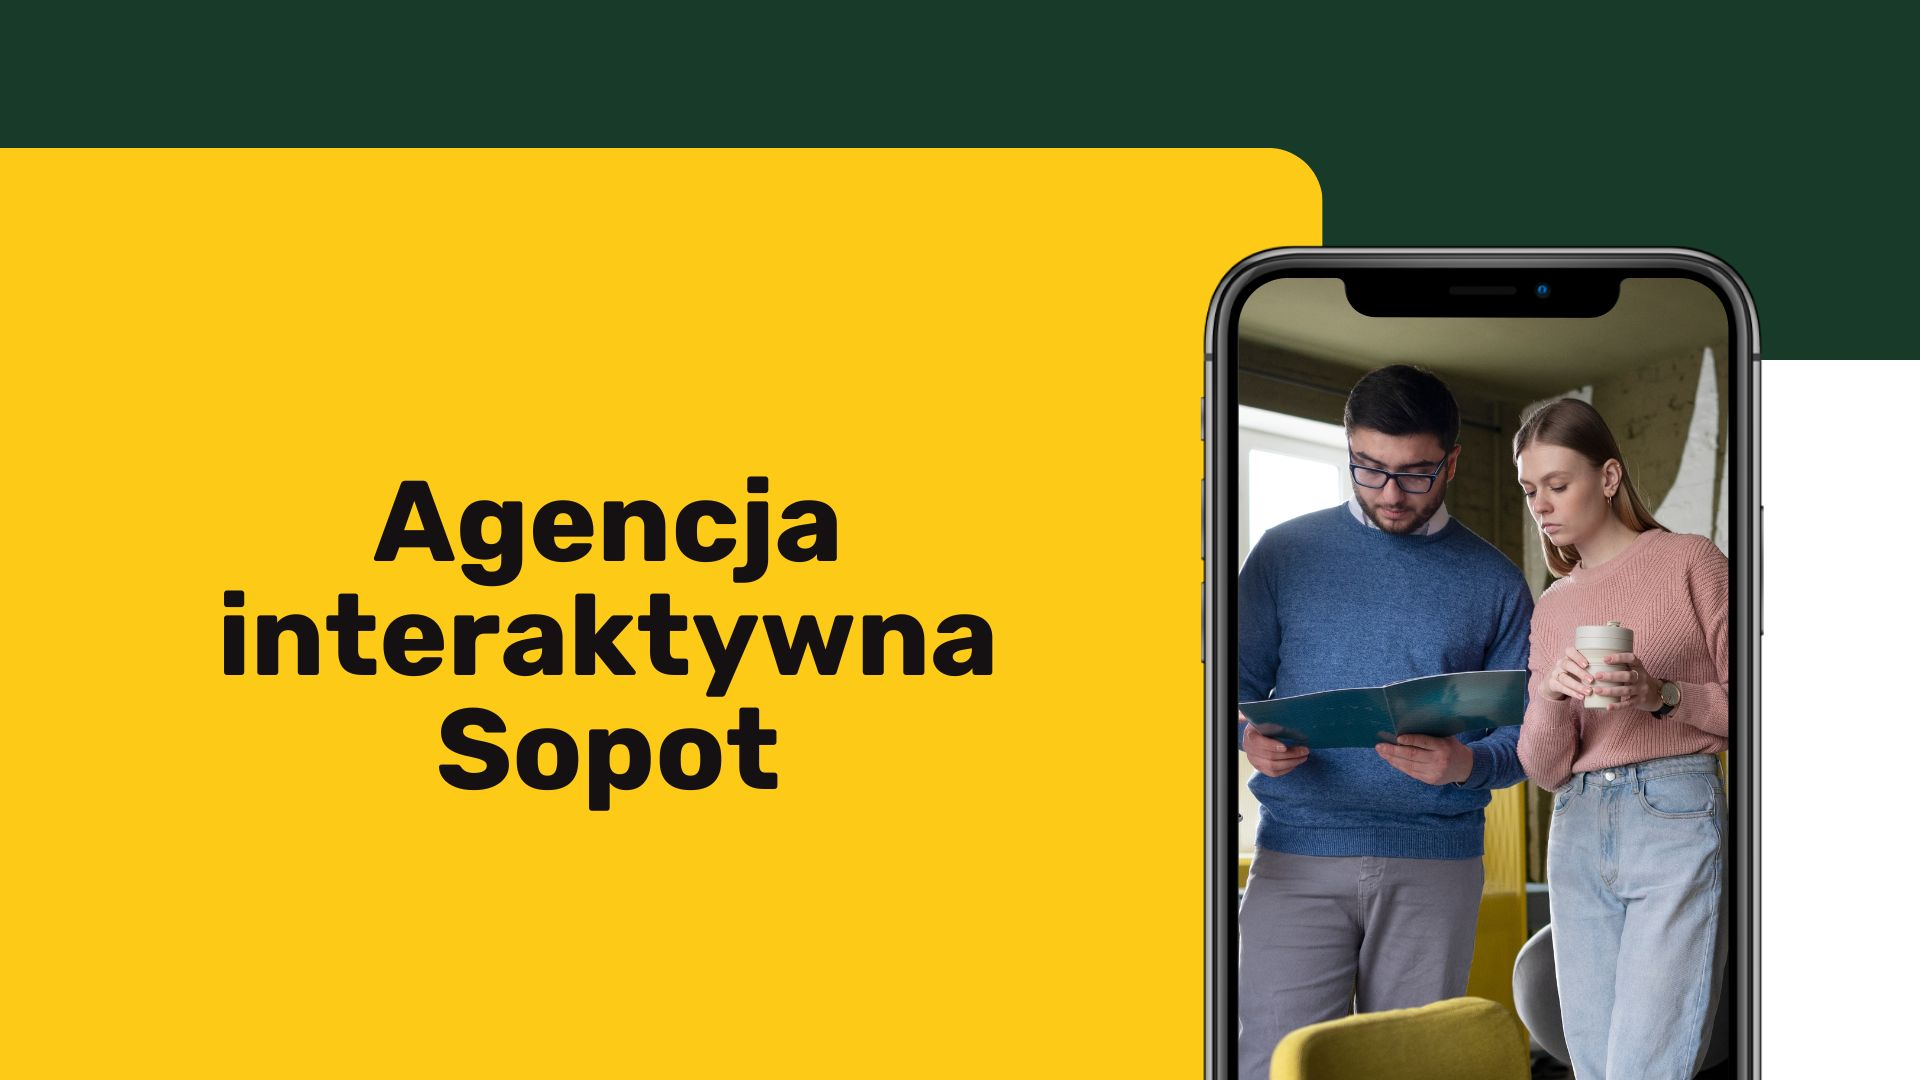 Agencja interaktywna Sopot